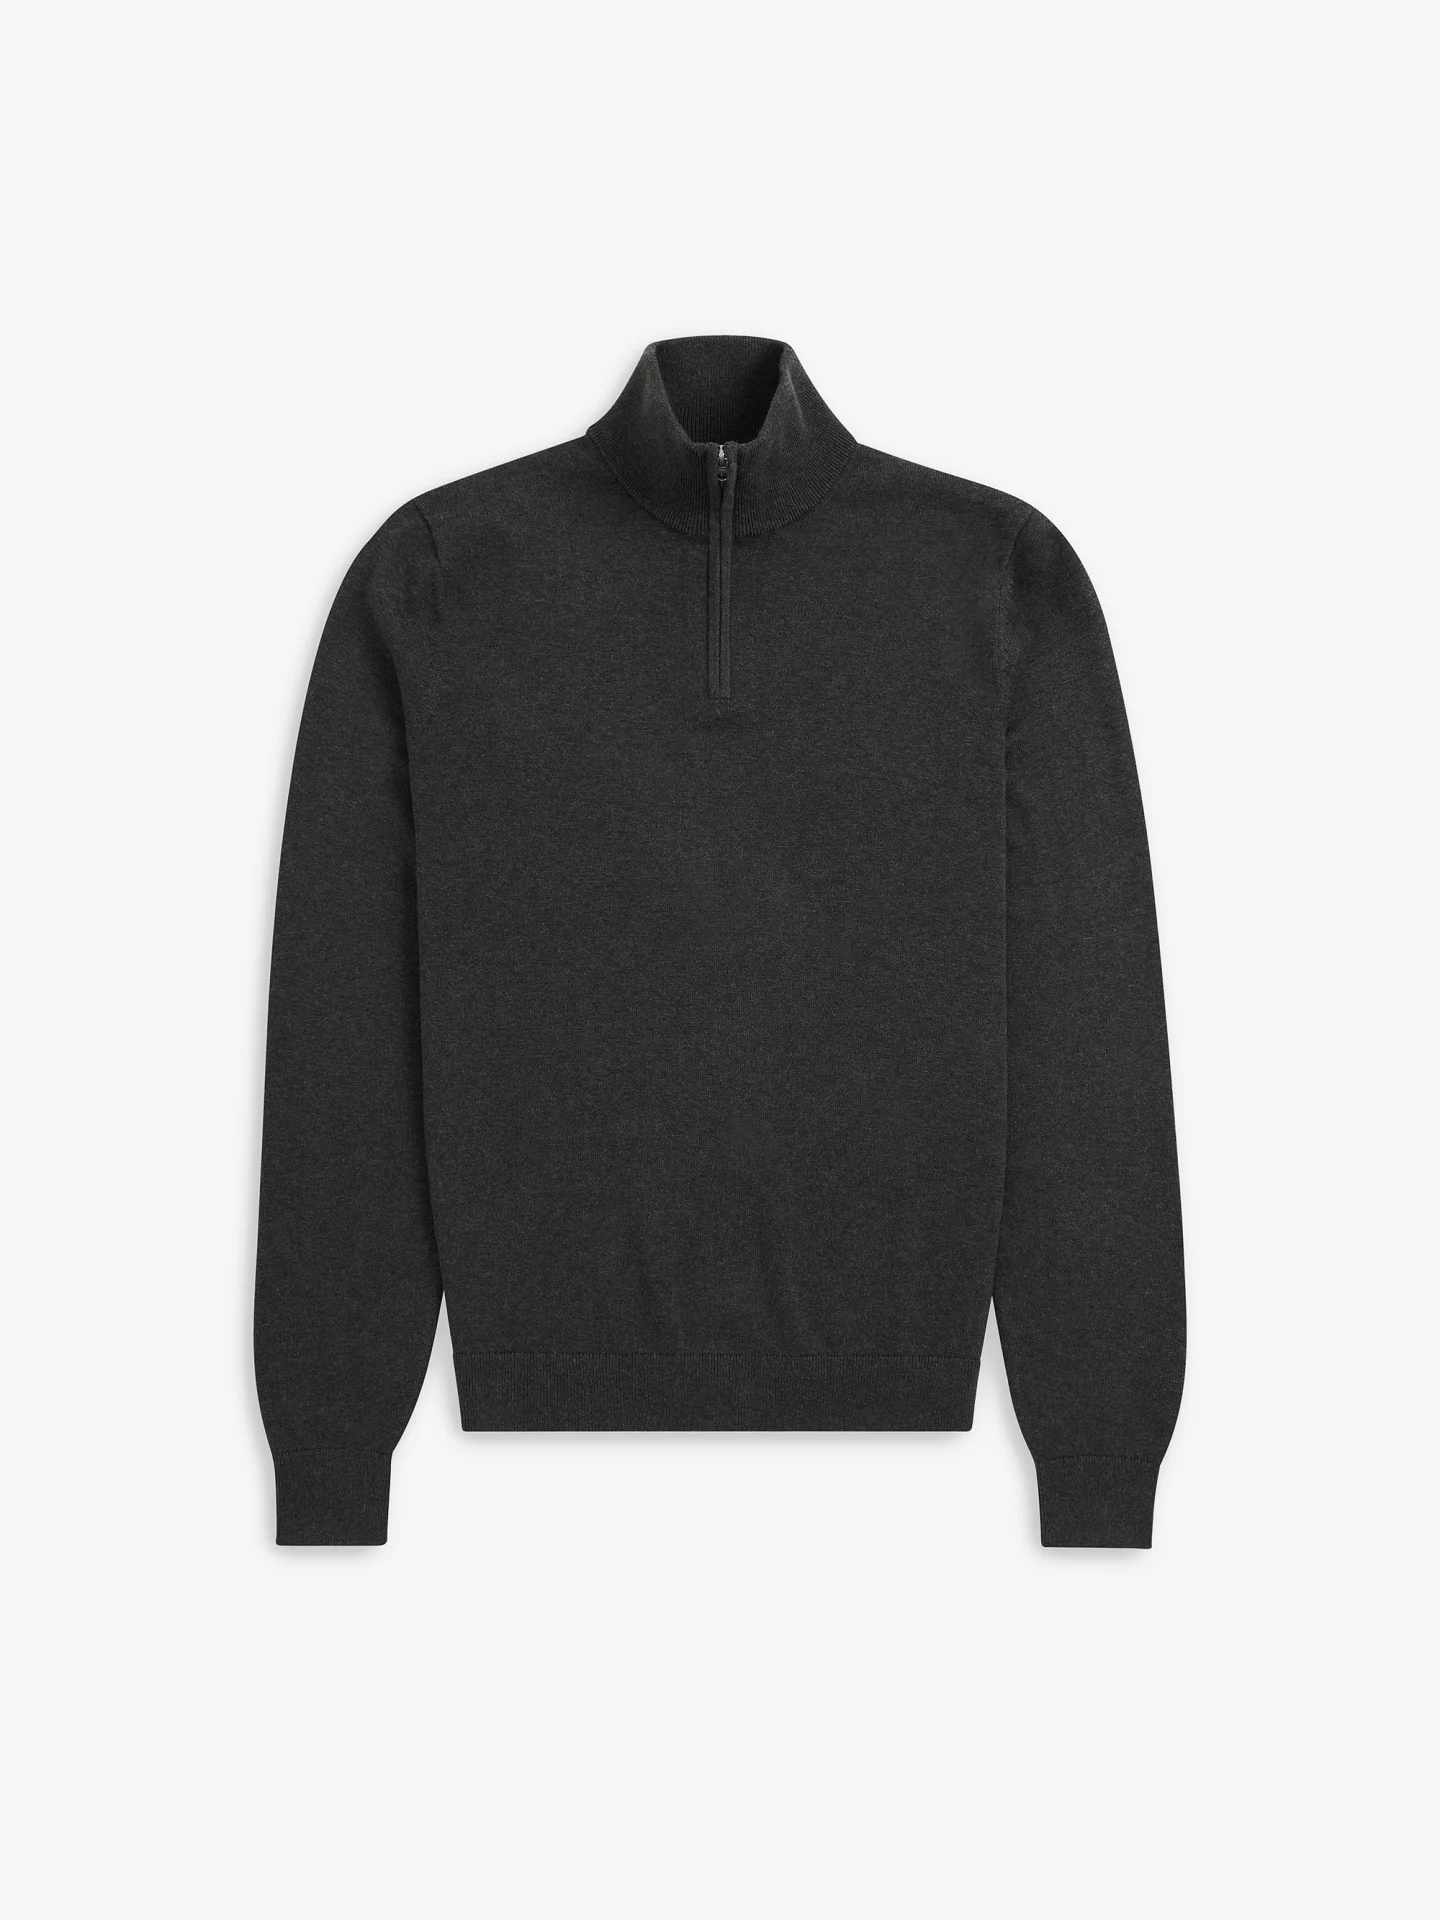 Hot Sales 50% Off- Men's Cotton Silk Half-Zip Jumper Pullover (Buy 2 Free Shipping)